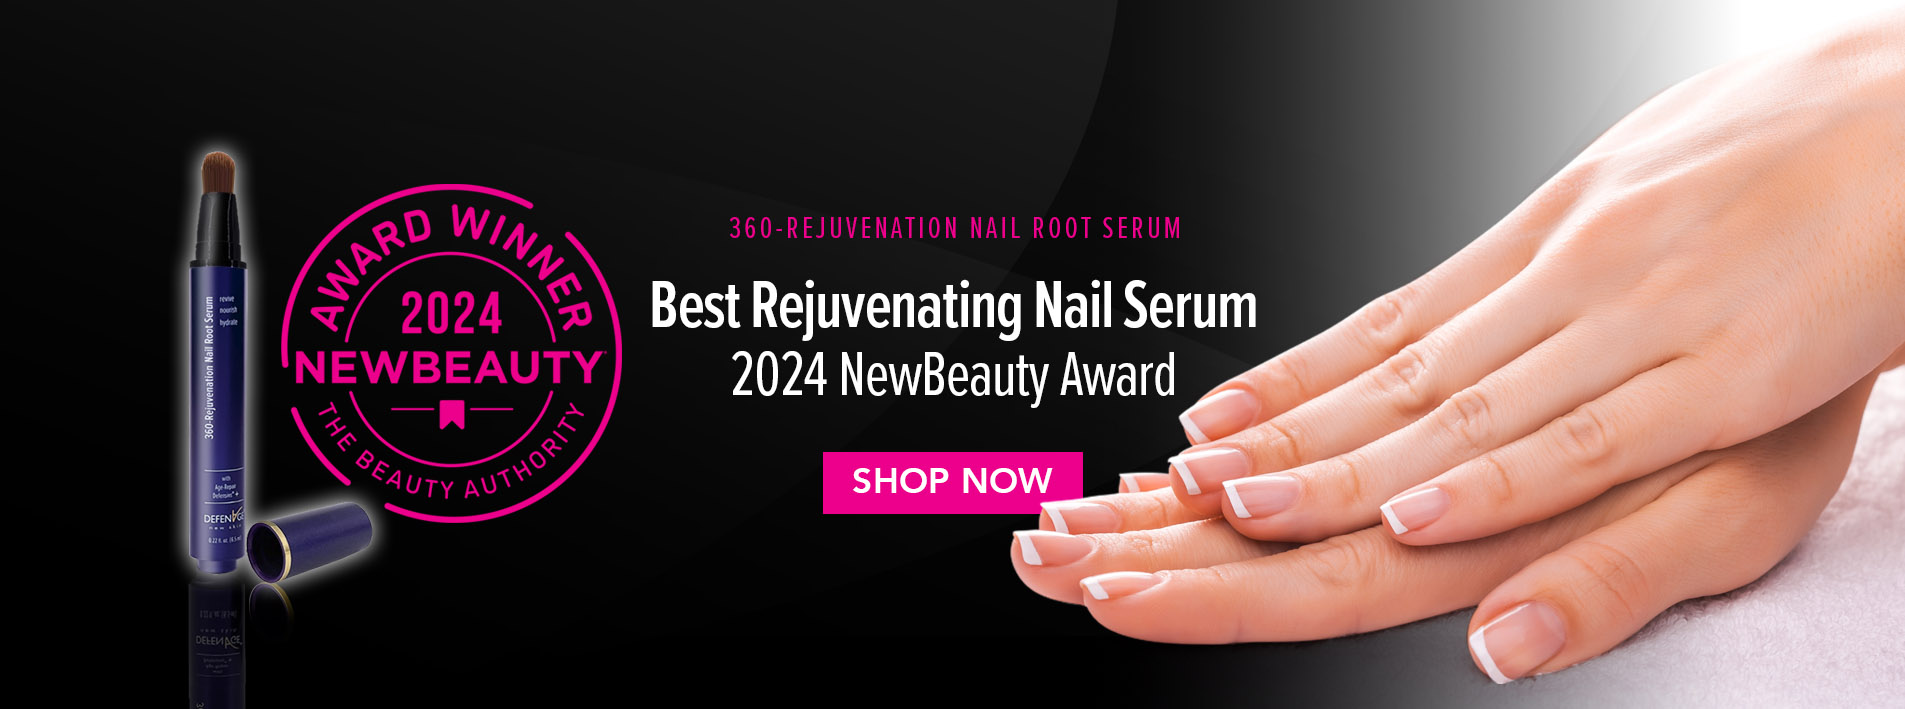 NewBeauty Award: Best Rejuvenating Nail Serum 